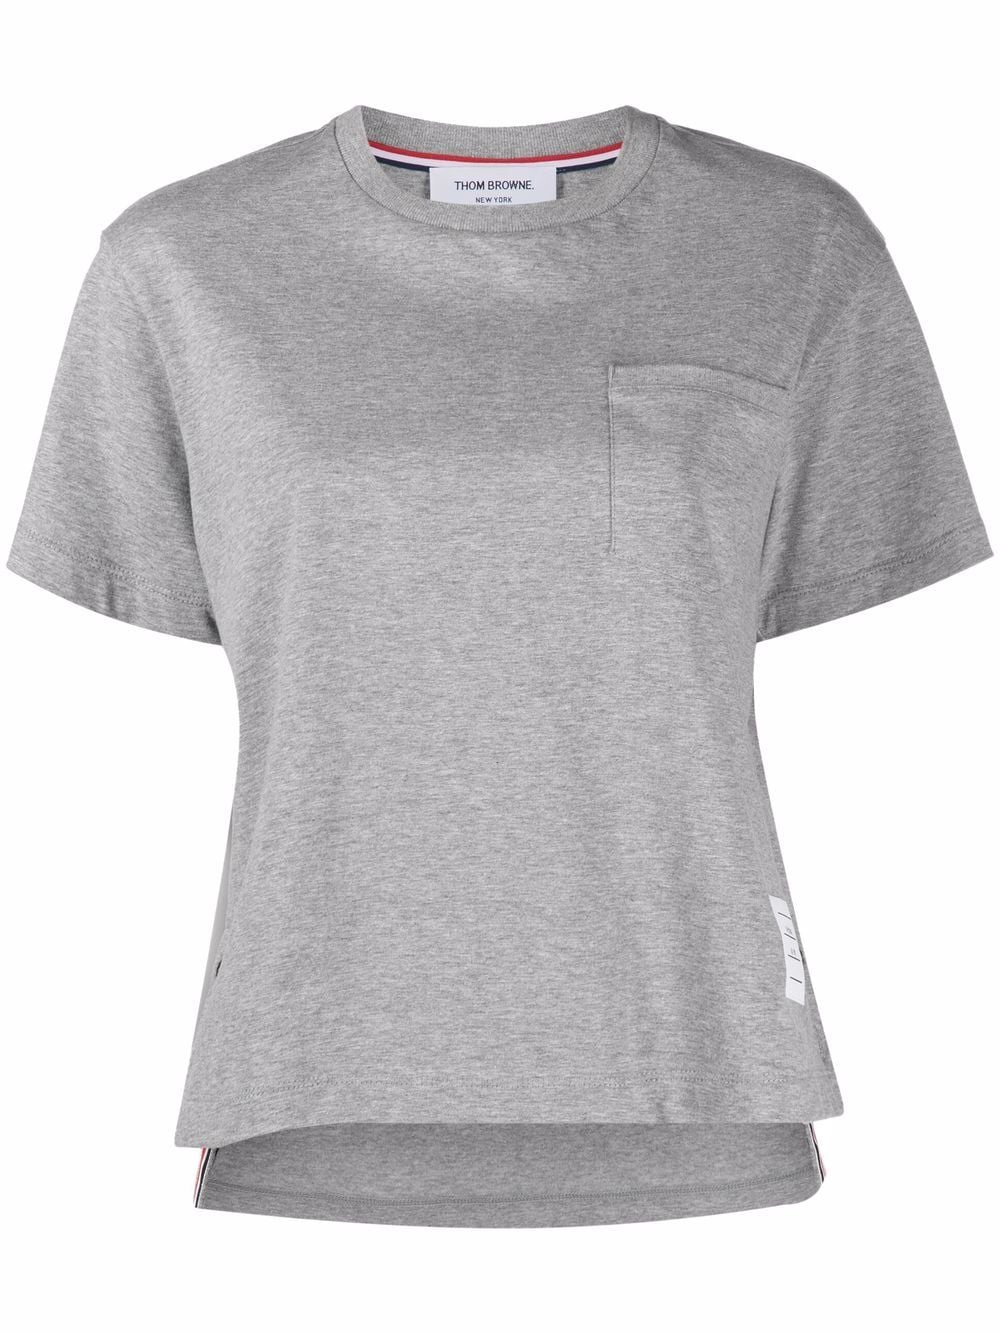 Thom Browne T-Shirt mit Logo - Grau von Thom Browne